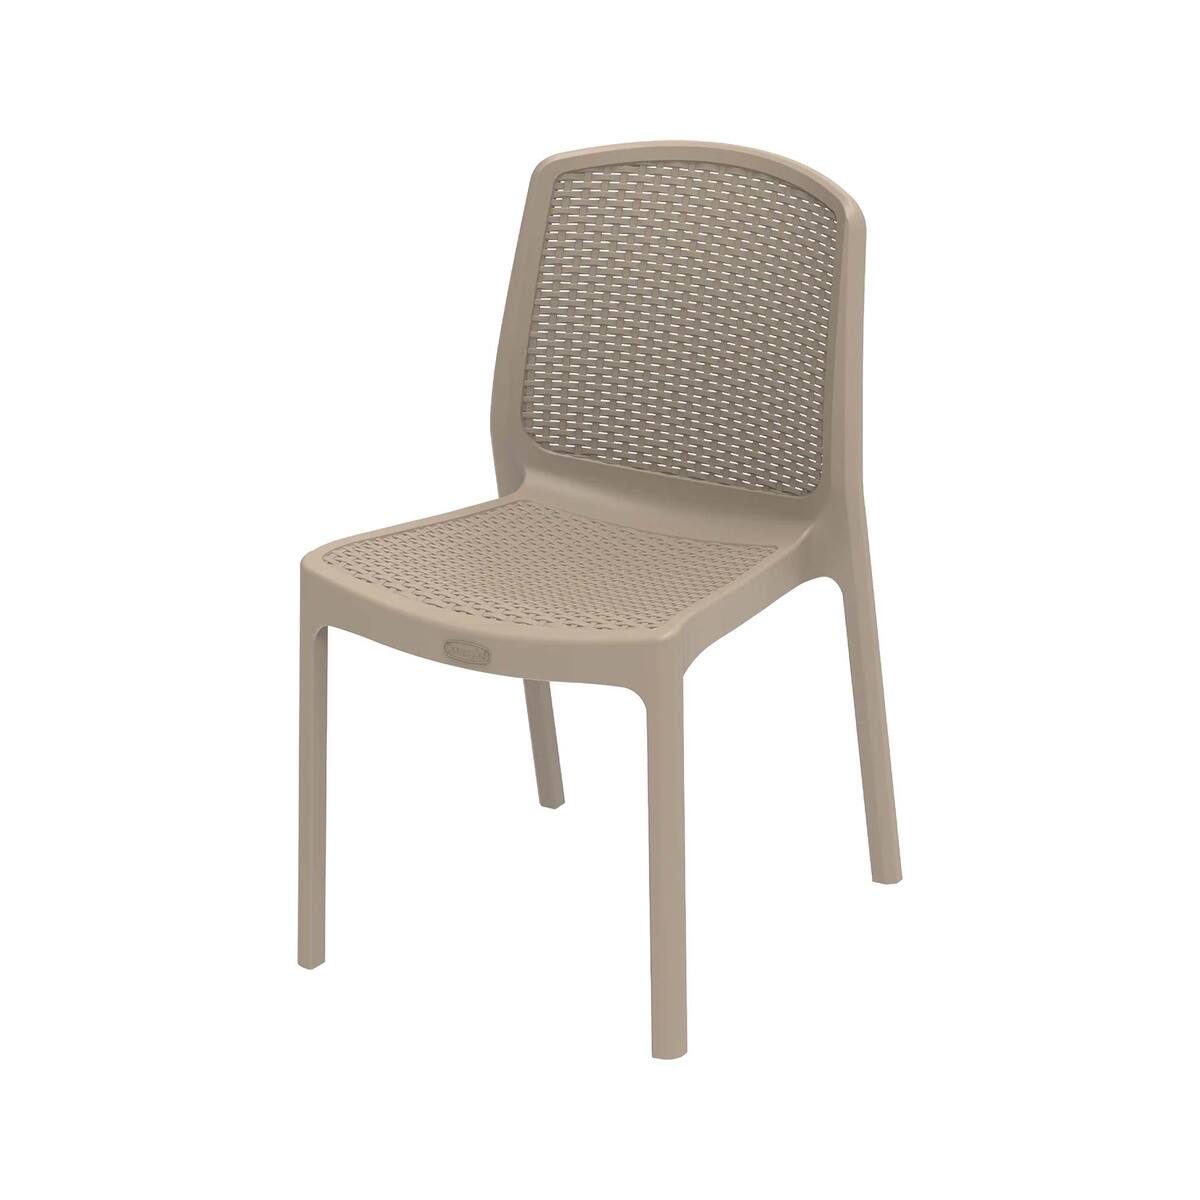 Cosmoplast Cedarattan Armless chair IFOFXX006WT Warm Taupe